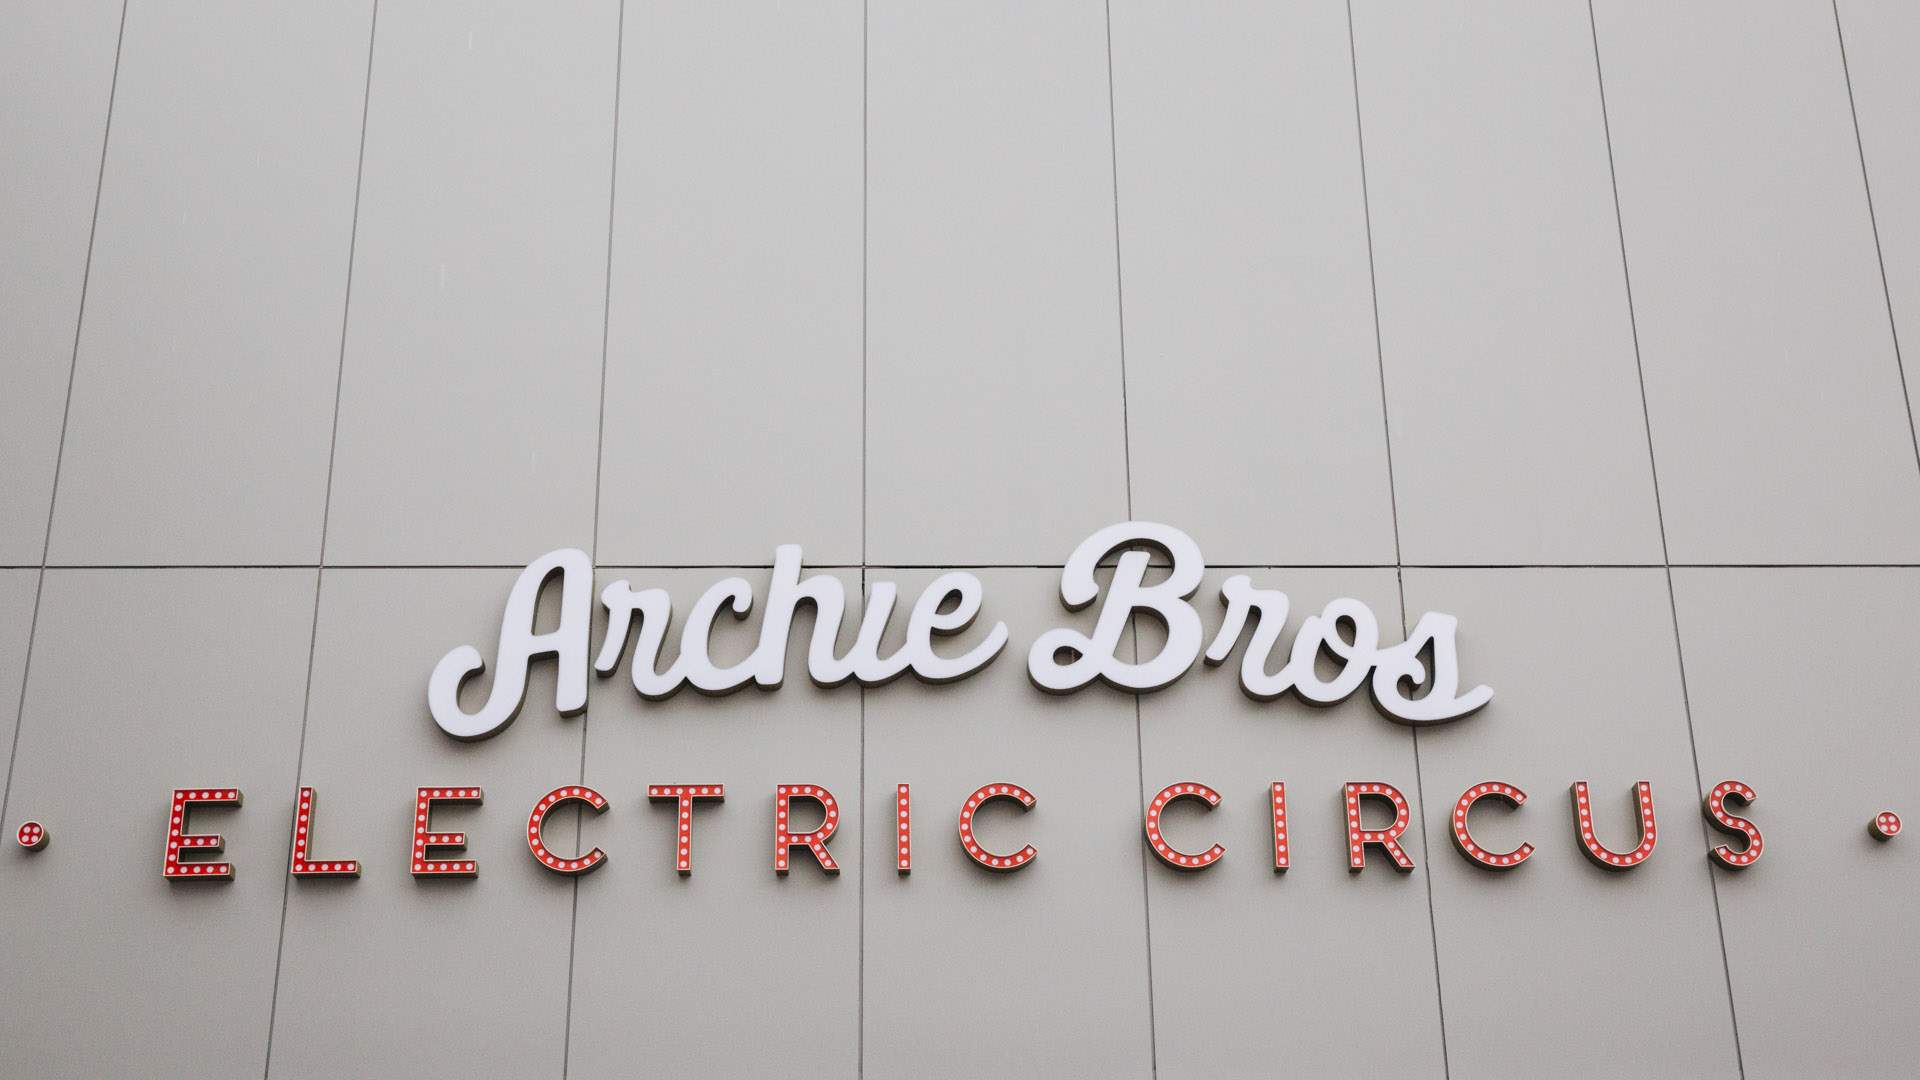 Archie Brothers Cirque Electriq